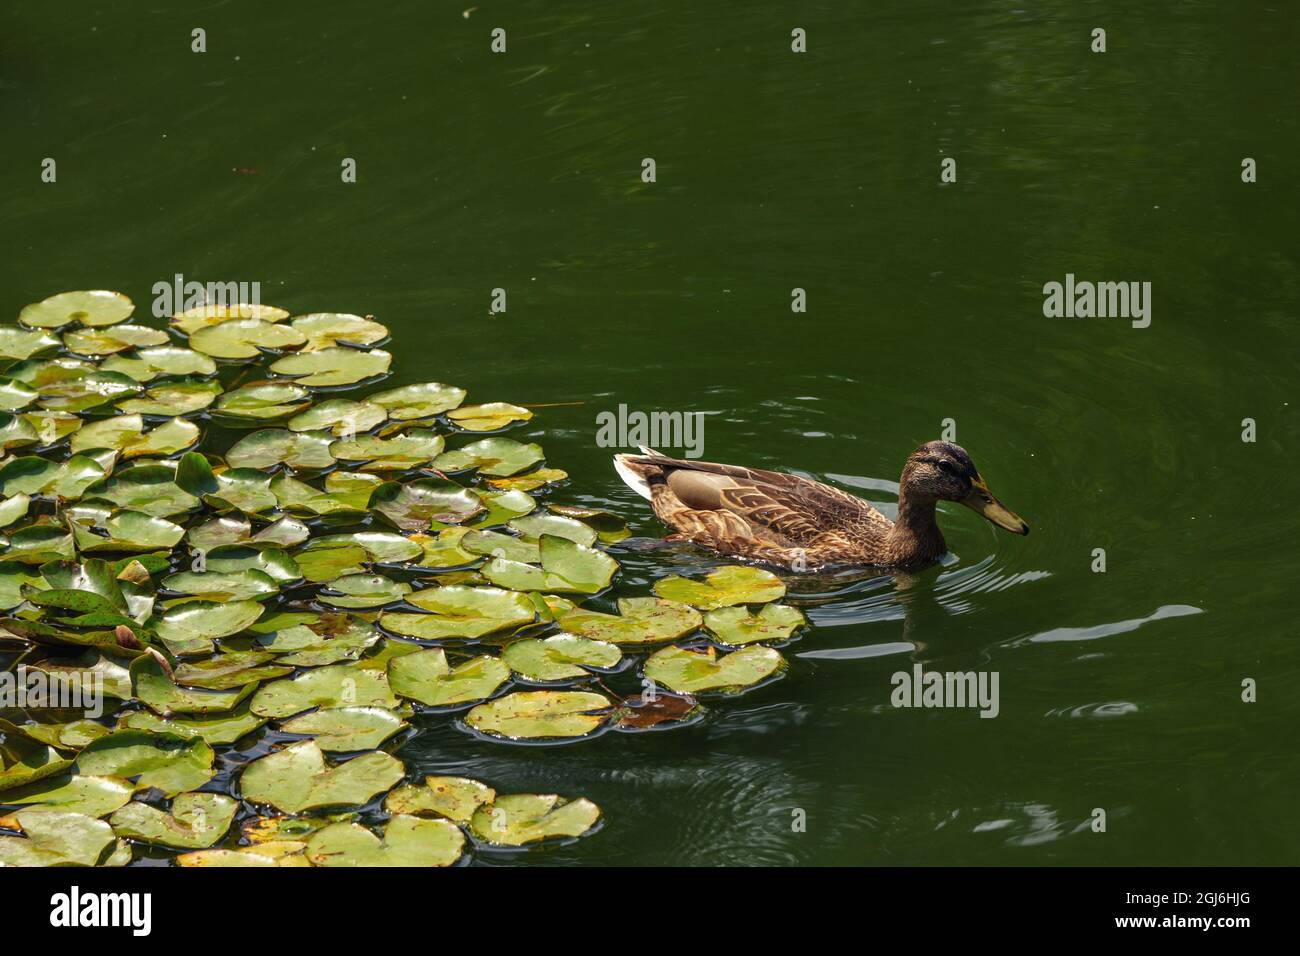 Brown mallard duck on a pond calm green water surface Stock Photo